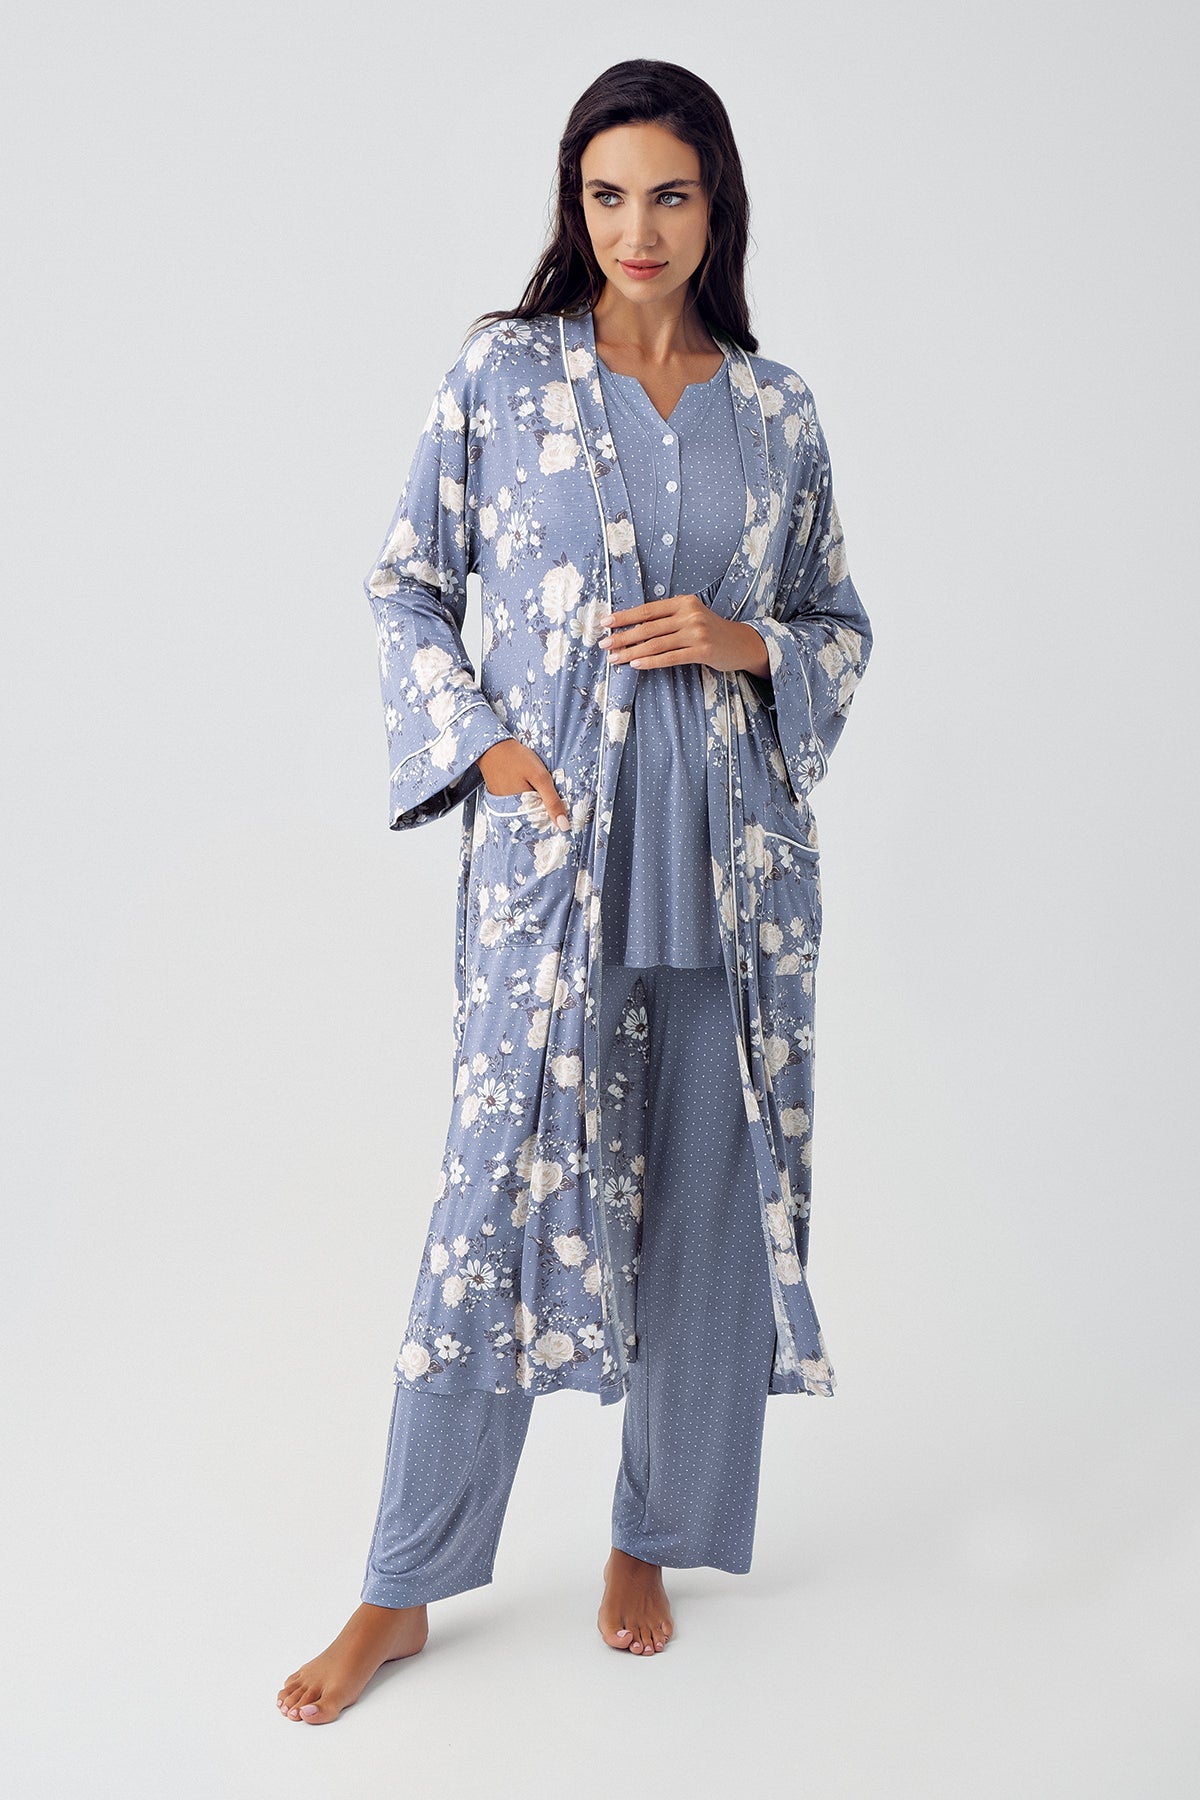 Polka Dot 3-Pieces Maternity & Nursing Pajamas With Flower Patterned Robe Indigo - 15304